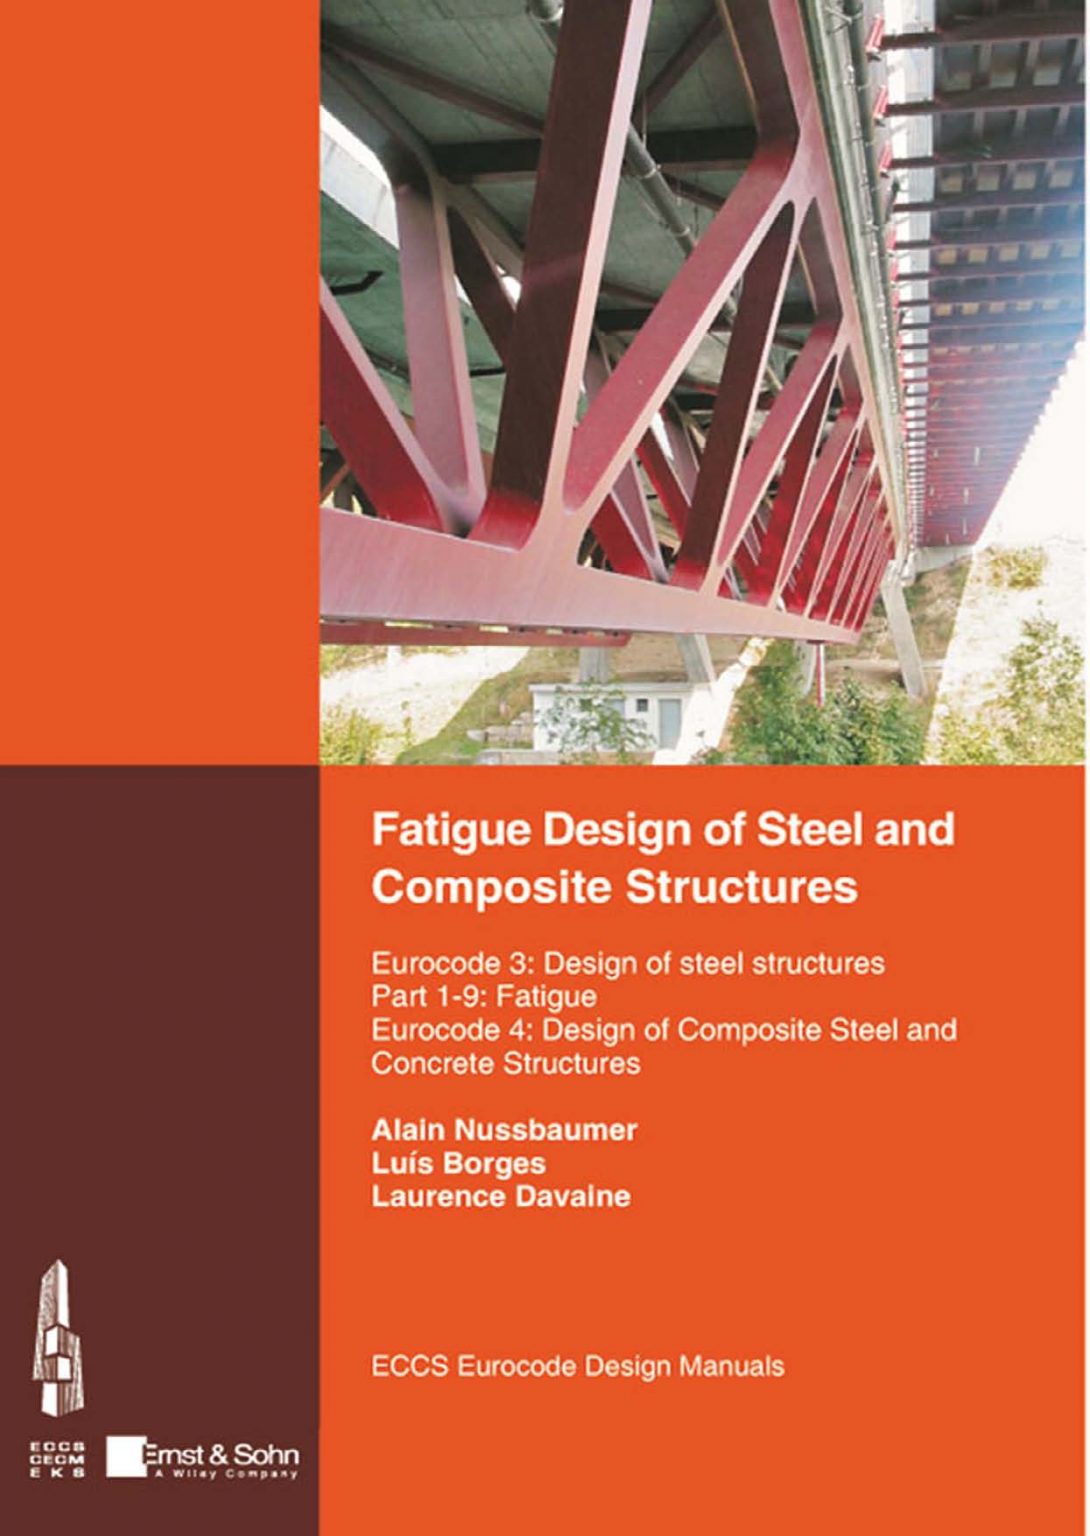 Fatigue Design of Steel and Composite Structures Eurocode 3 Design of